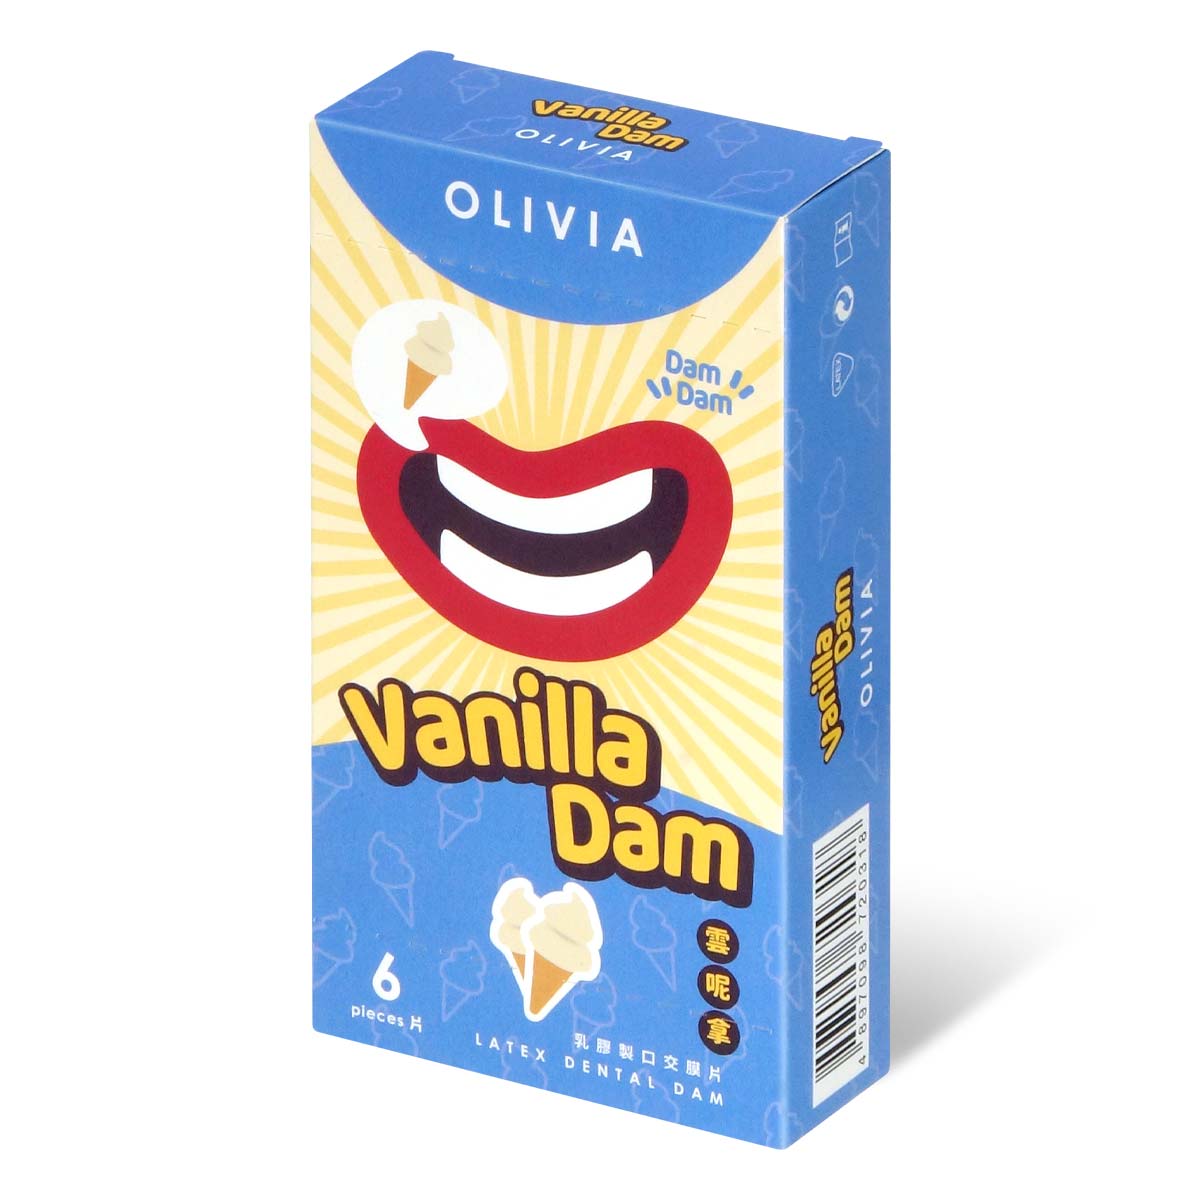 Olivia Vanilla Scent 6's Pack Latex Dams (Obsolete)-p_1